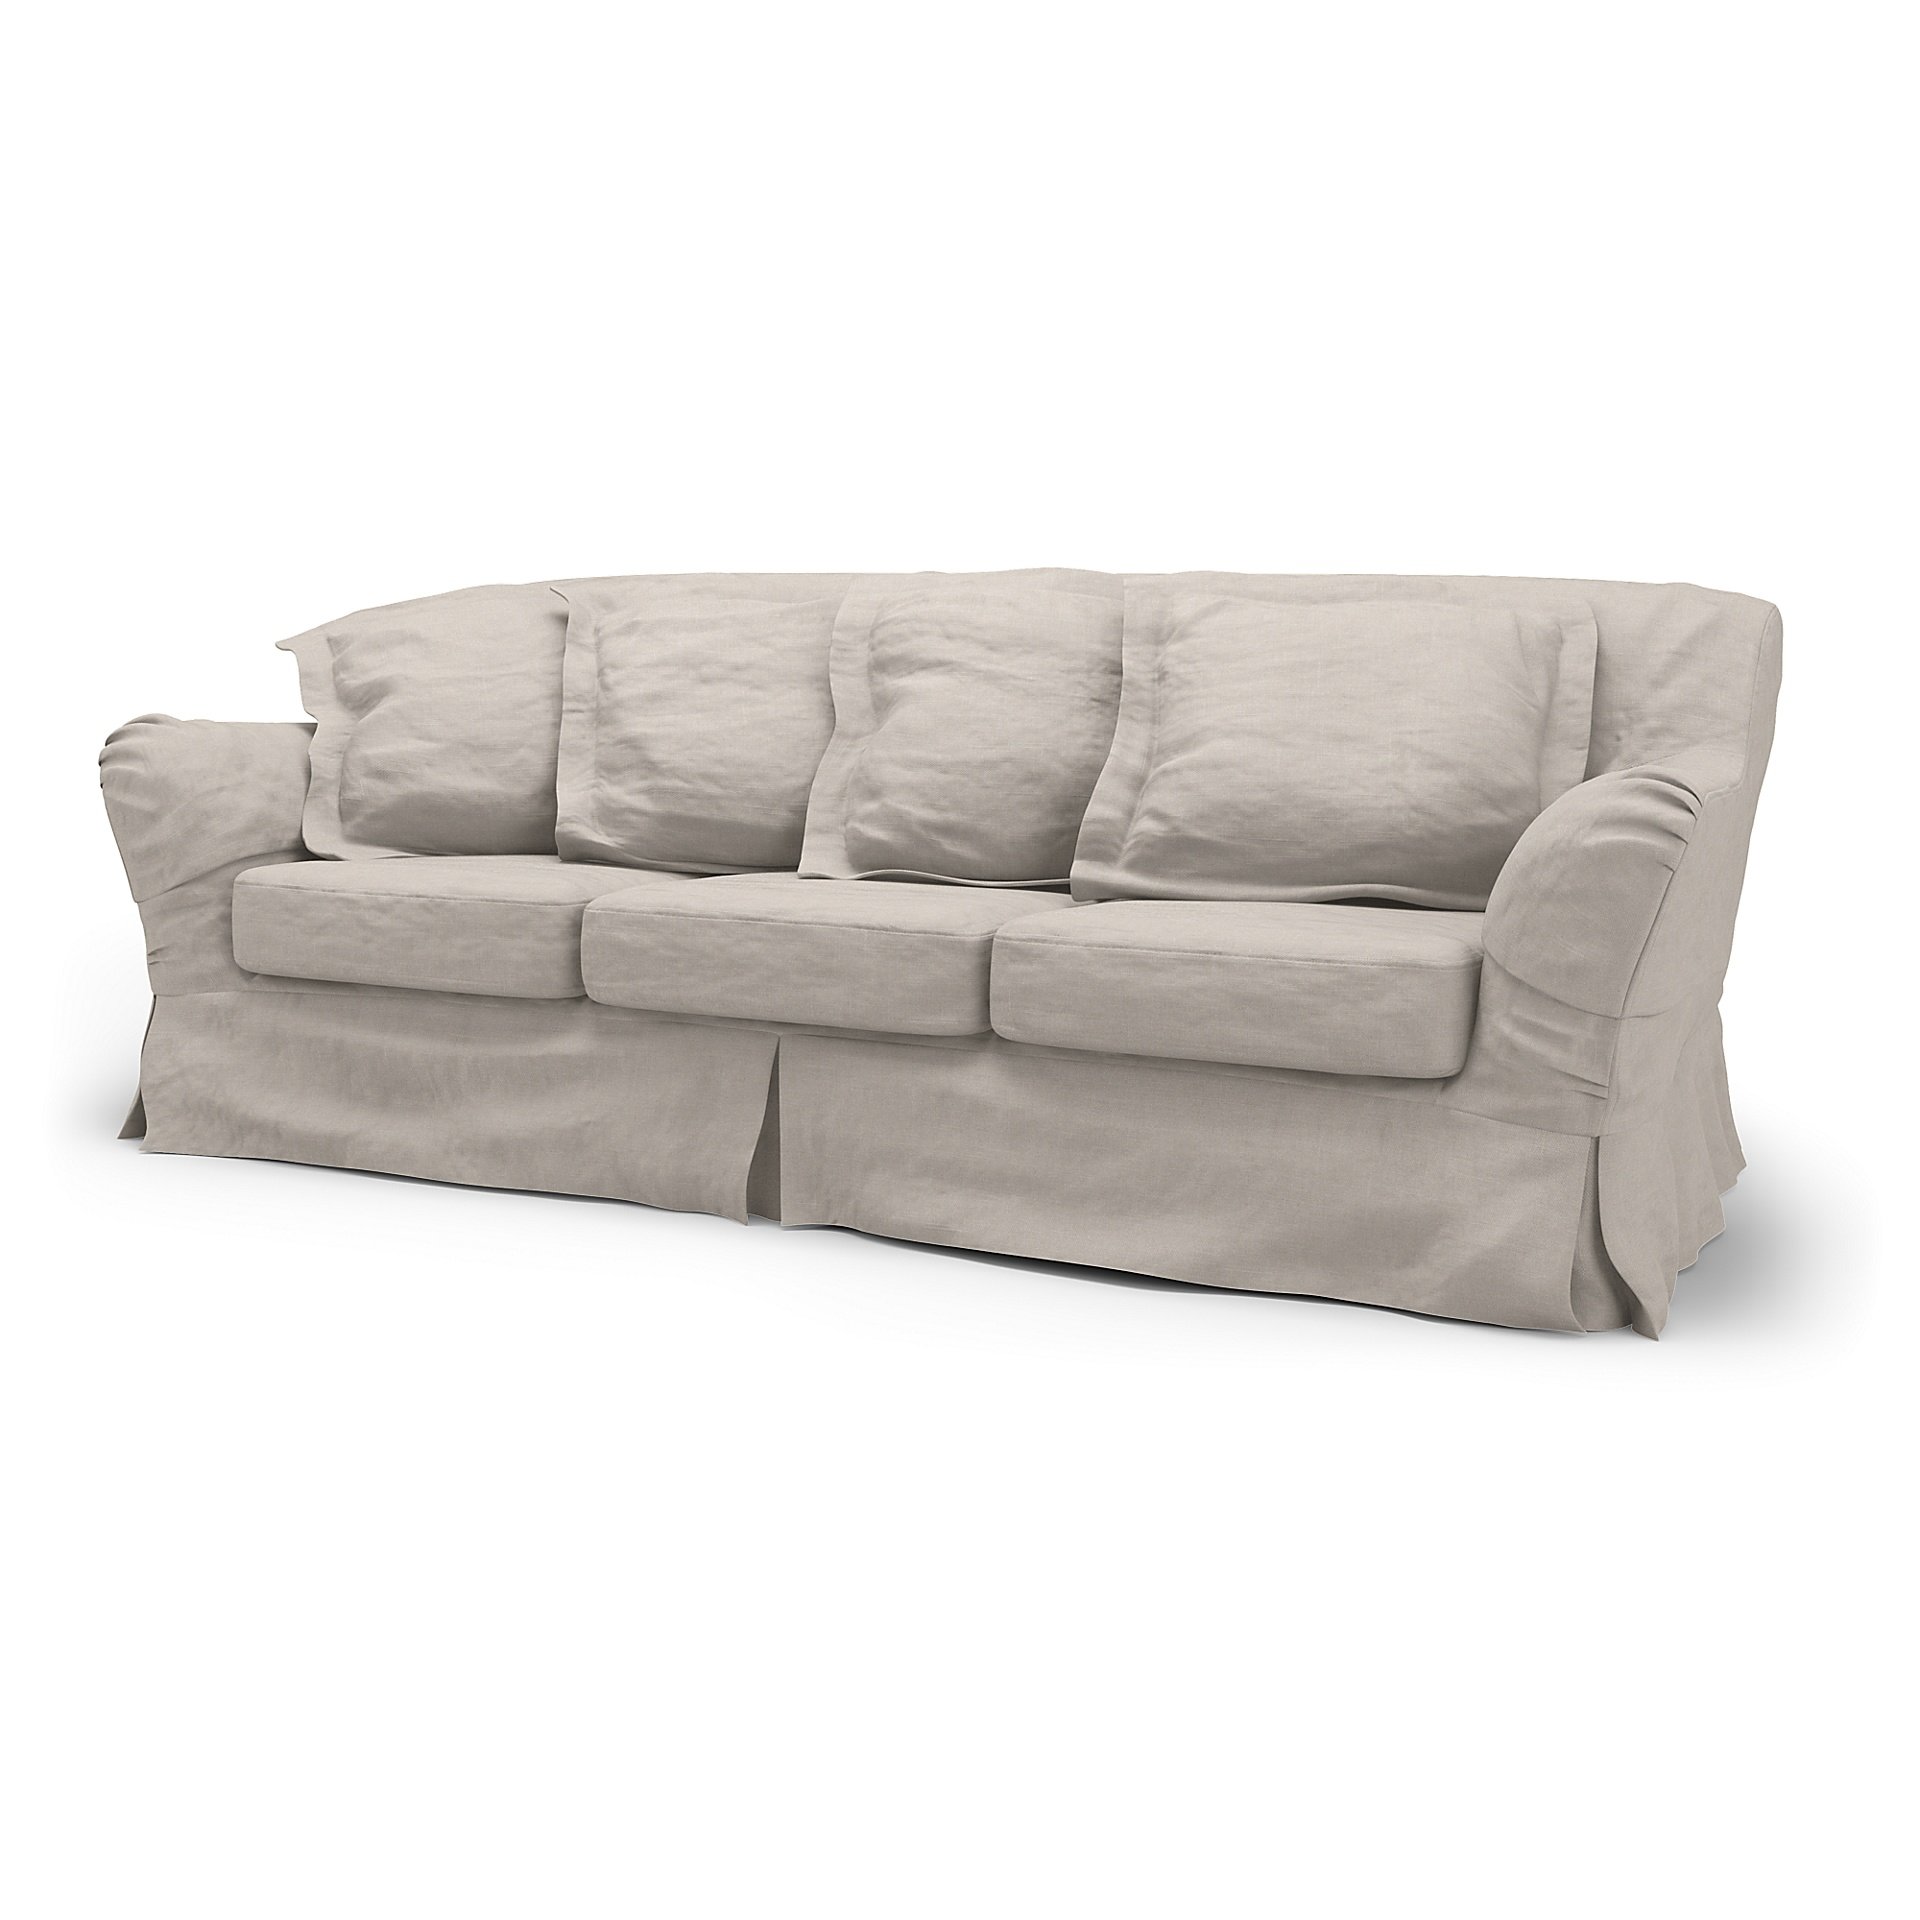 IKEA - Tomelilla 3 Seater Sofa Cover, Chalk, Linen - Bemz